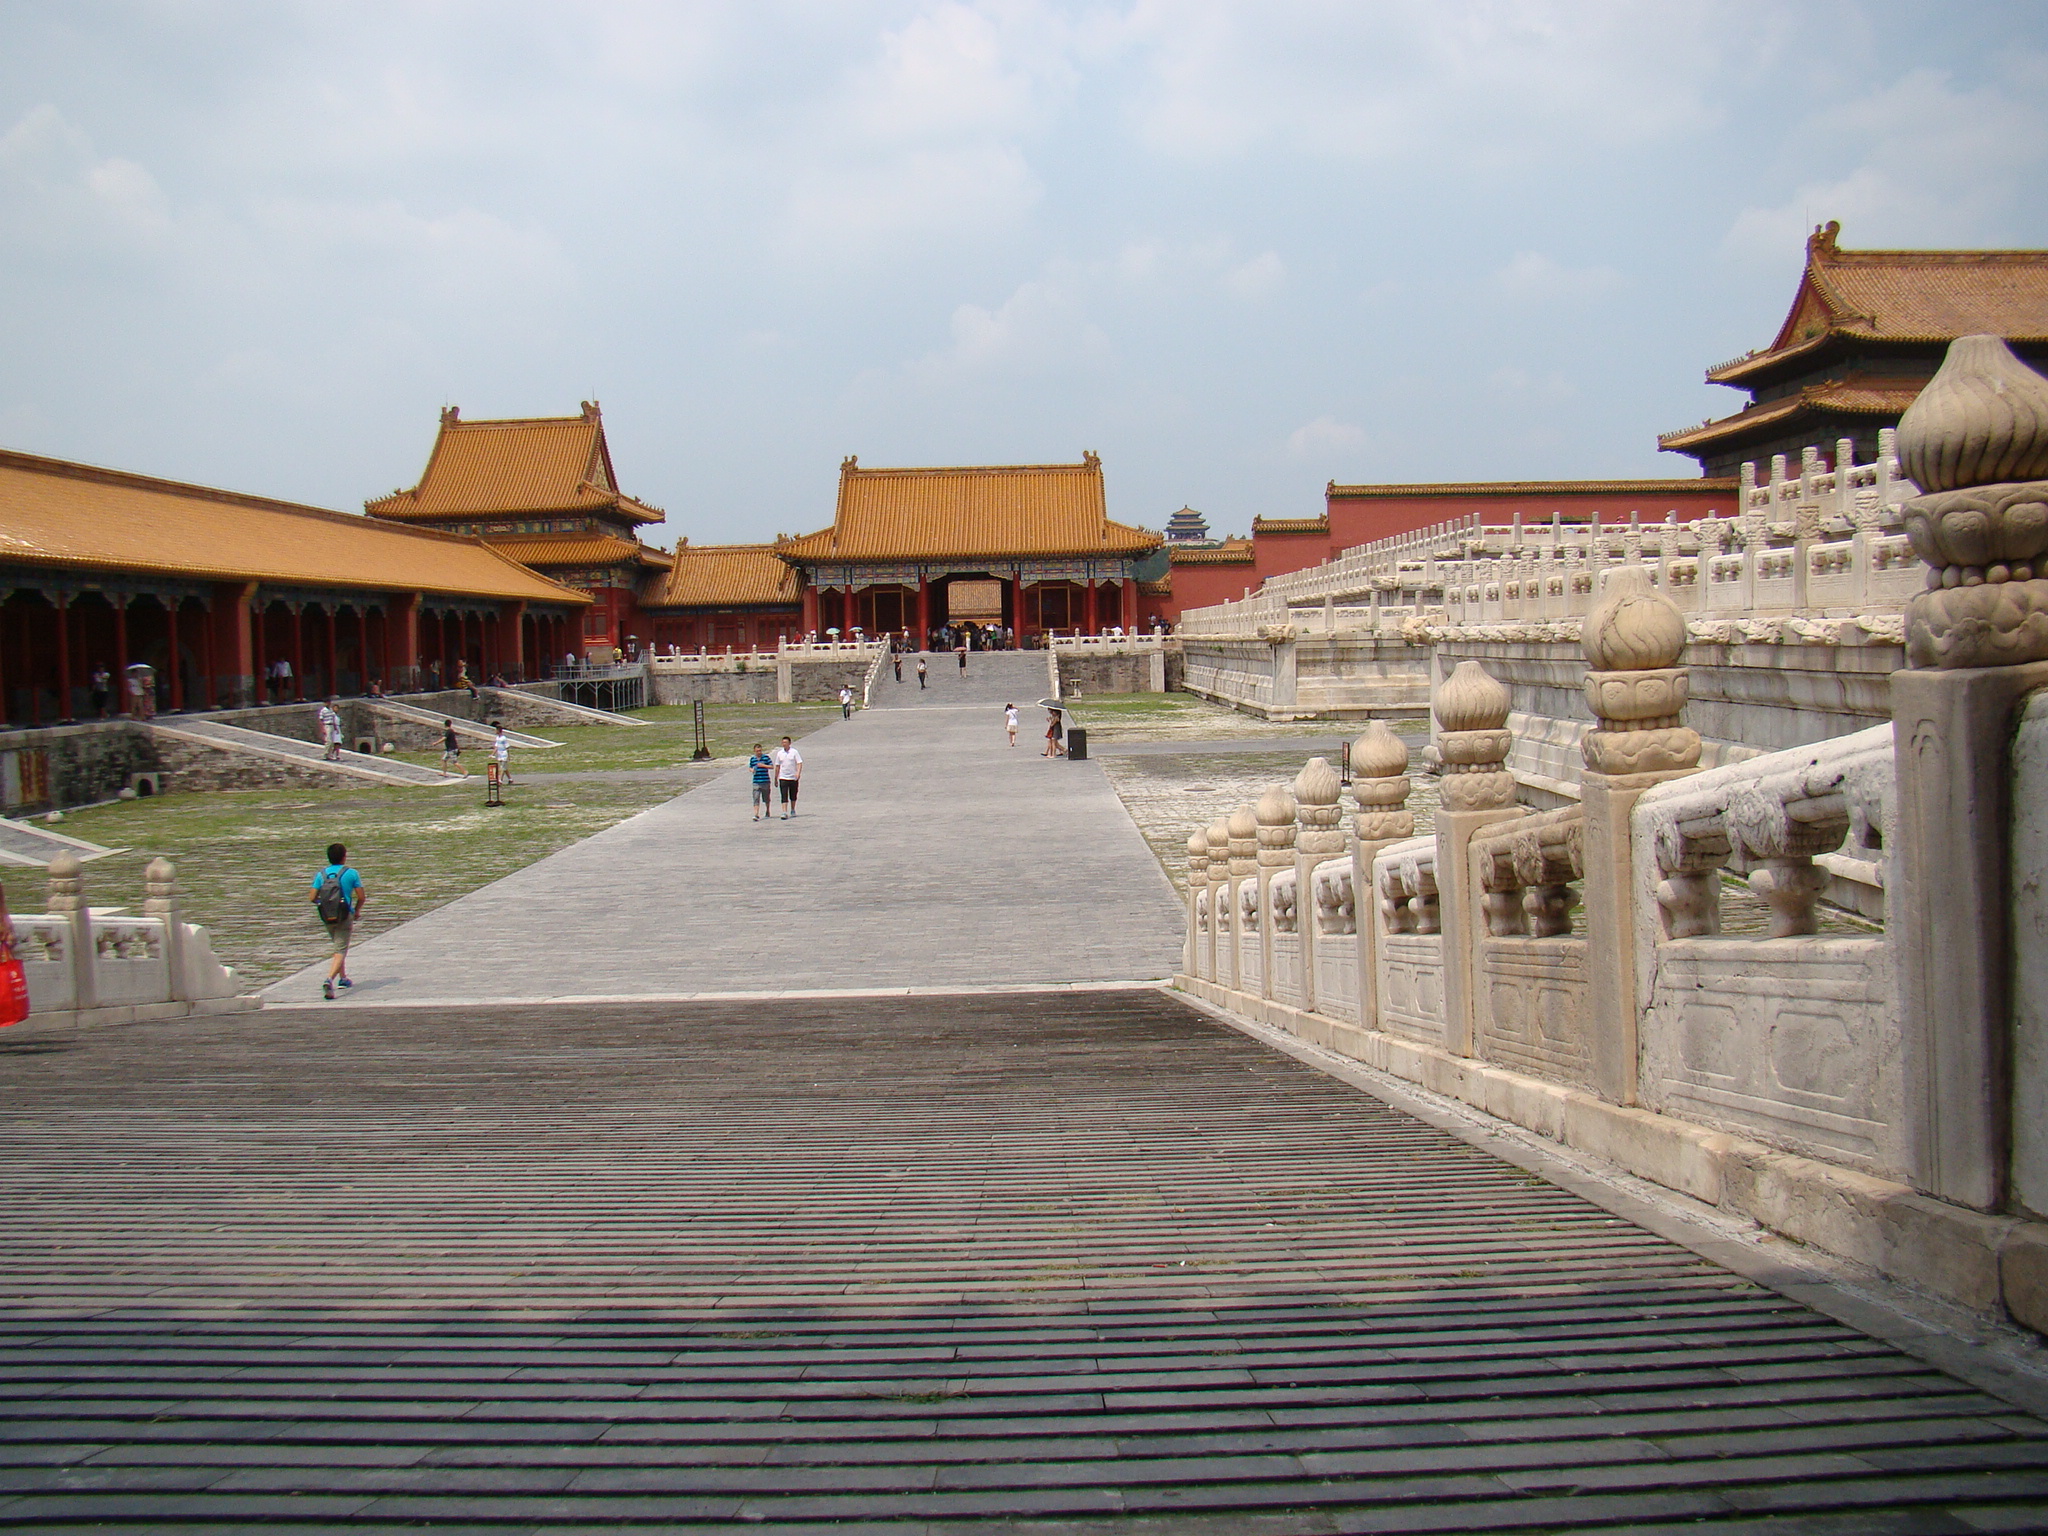 Stepping into Beijing's Forbidden City